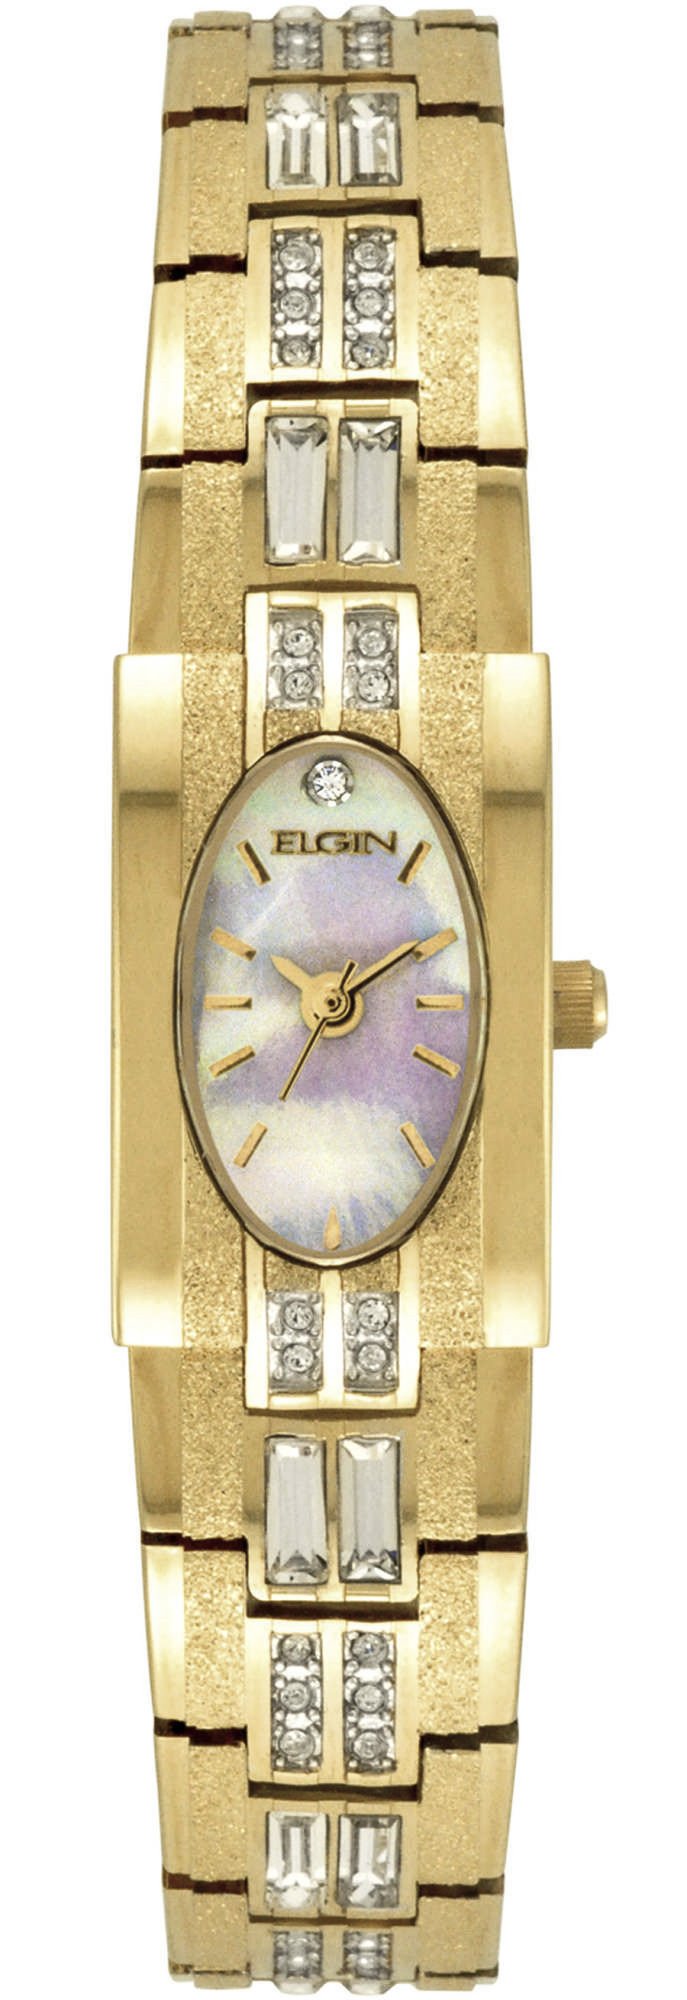 Model: Elgin Women's Gold Stainless Steel Watch With Swarovski Crystals EG713